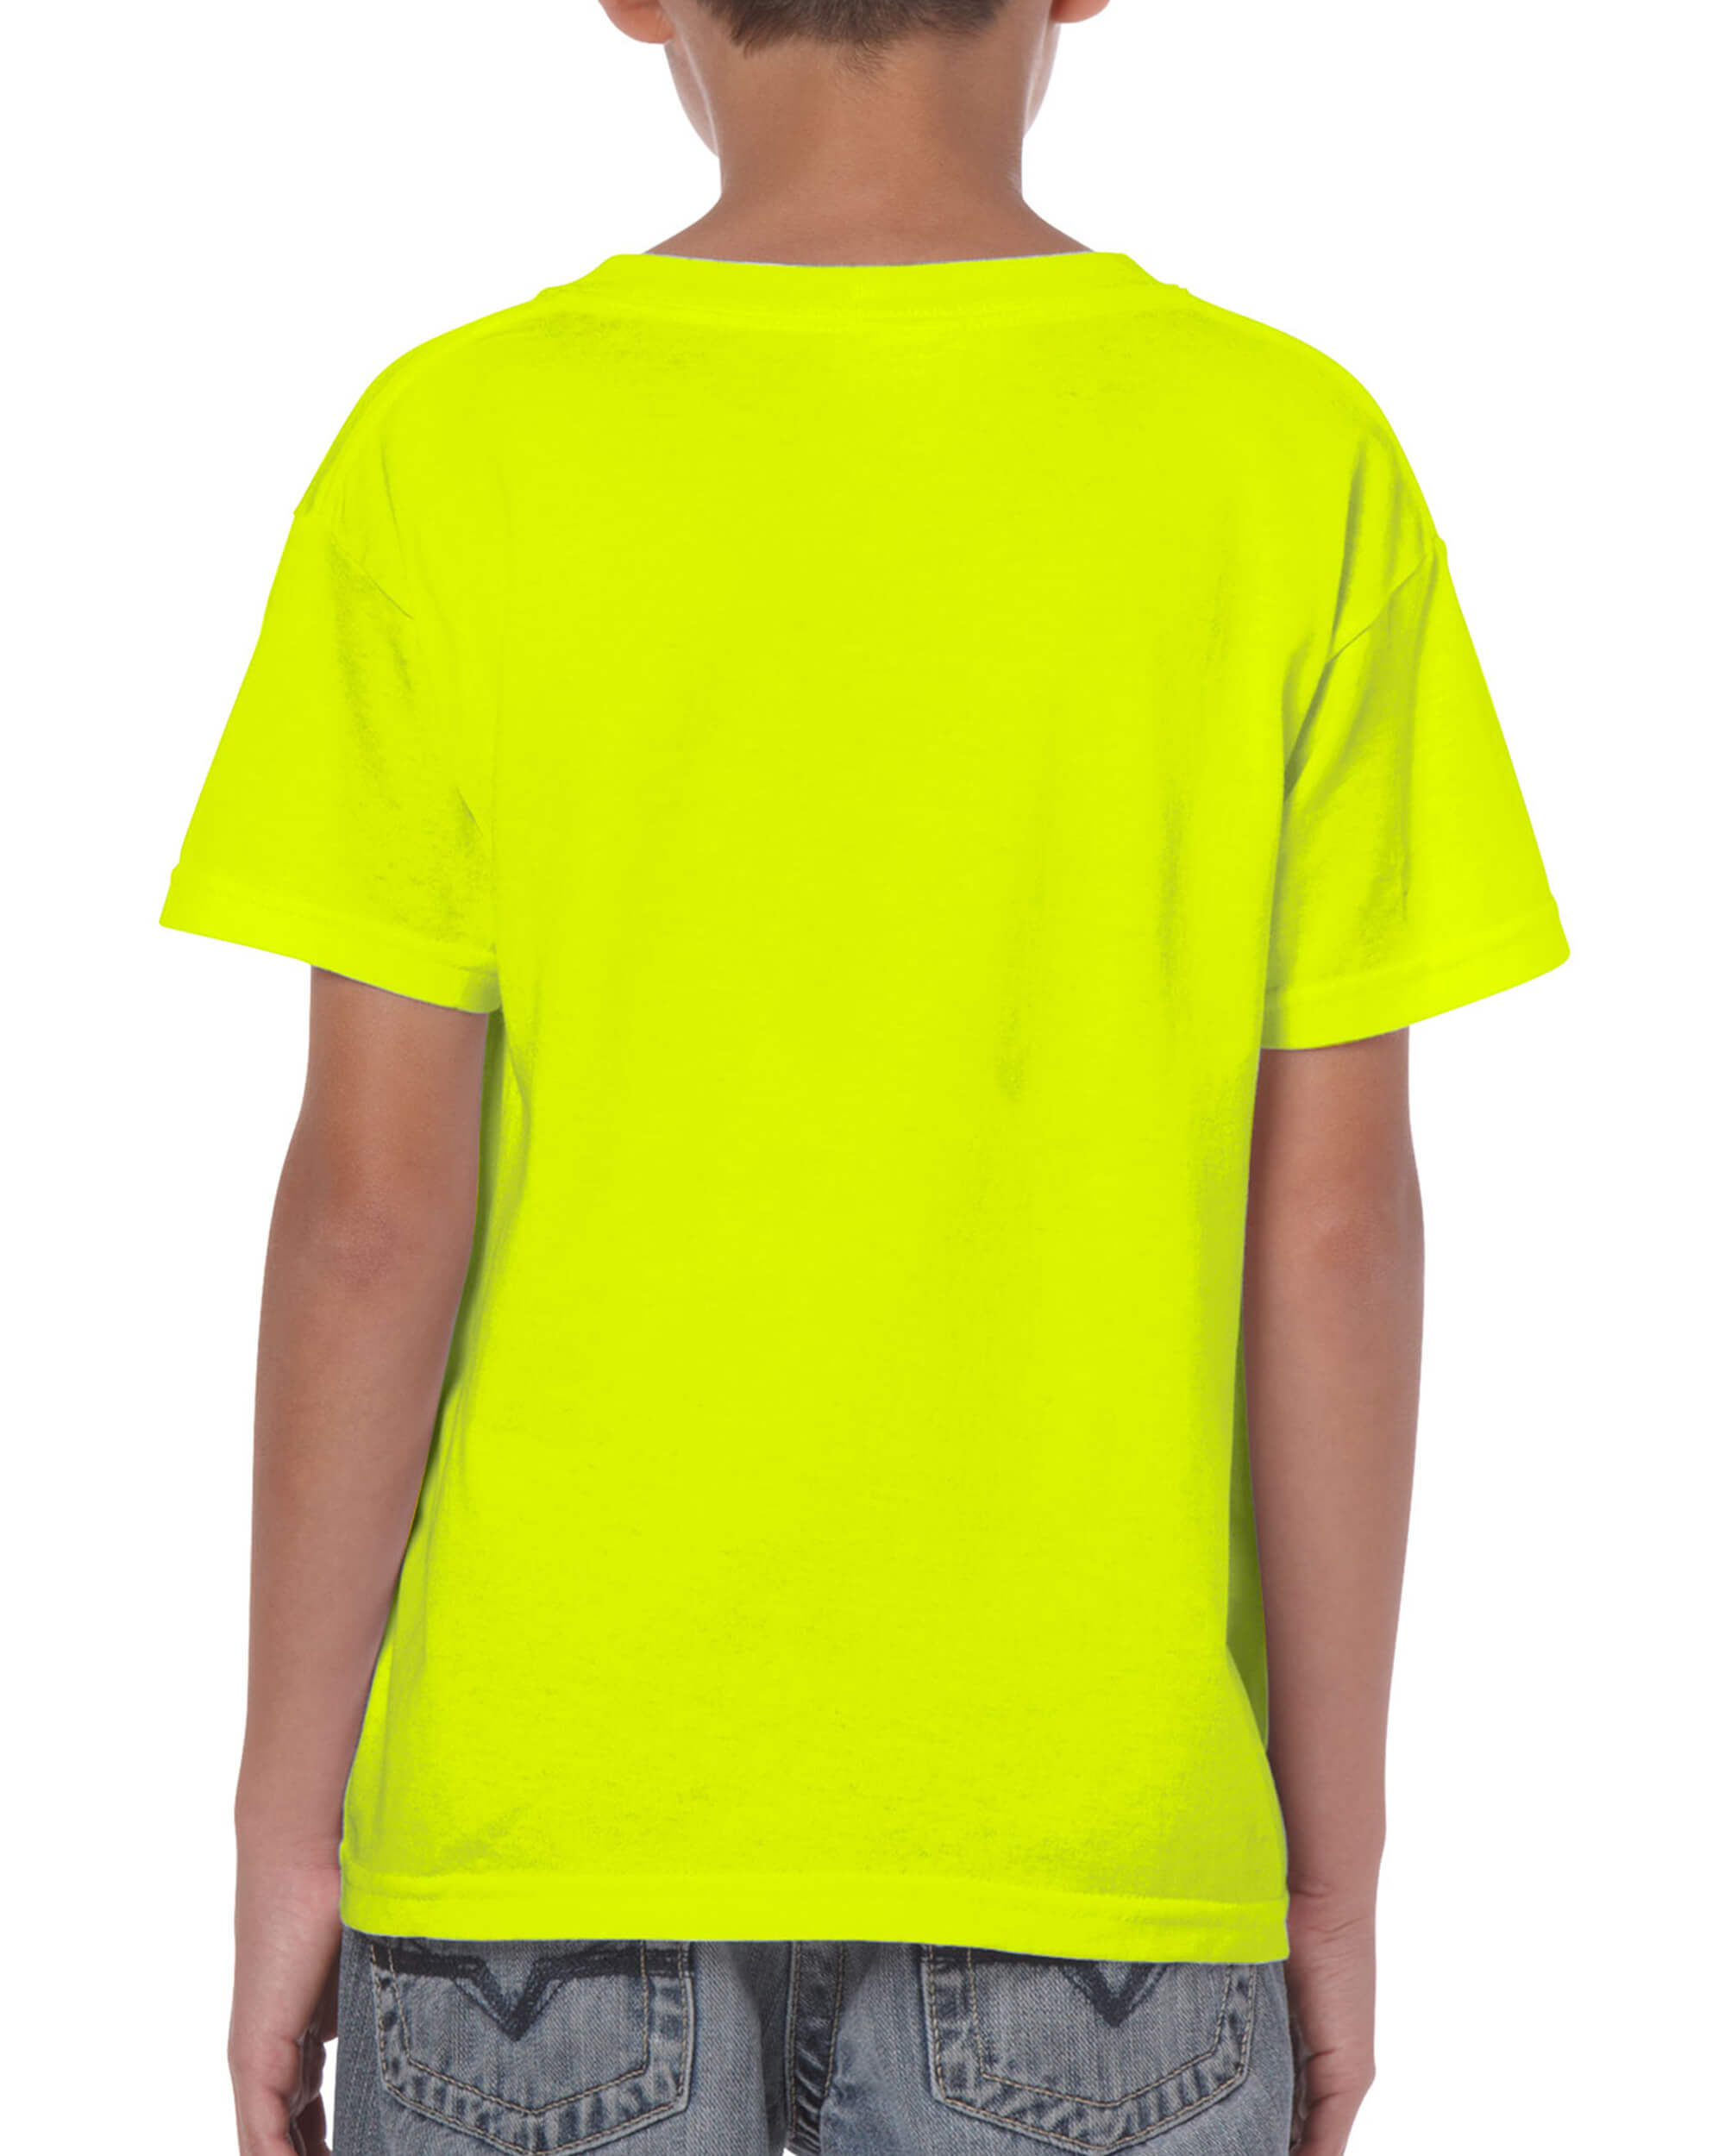 Kids Tshirt - Safety Green